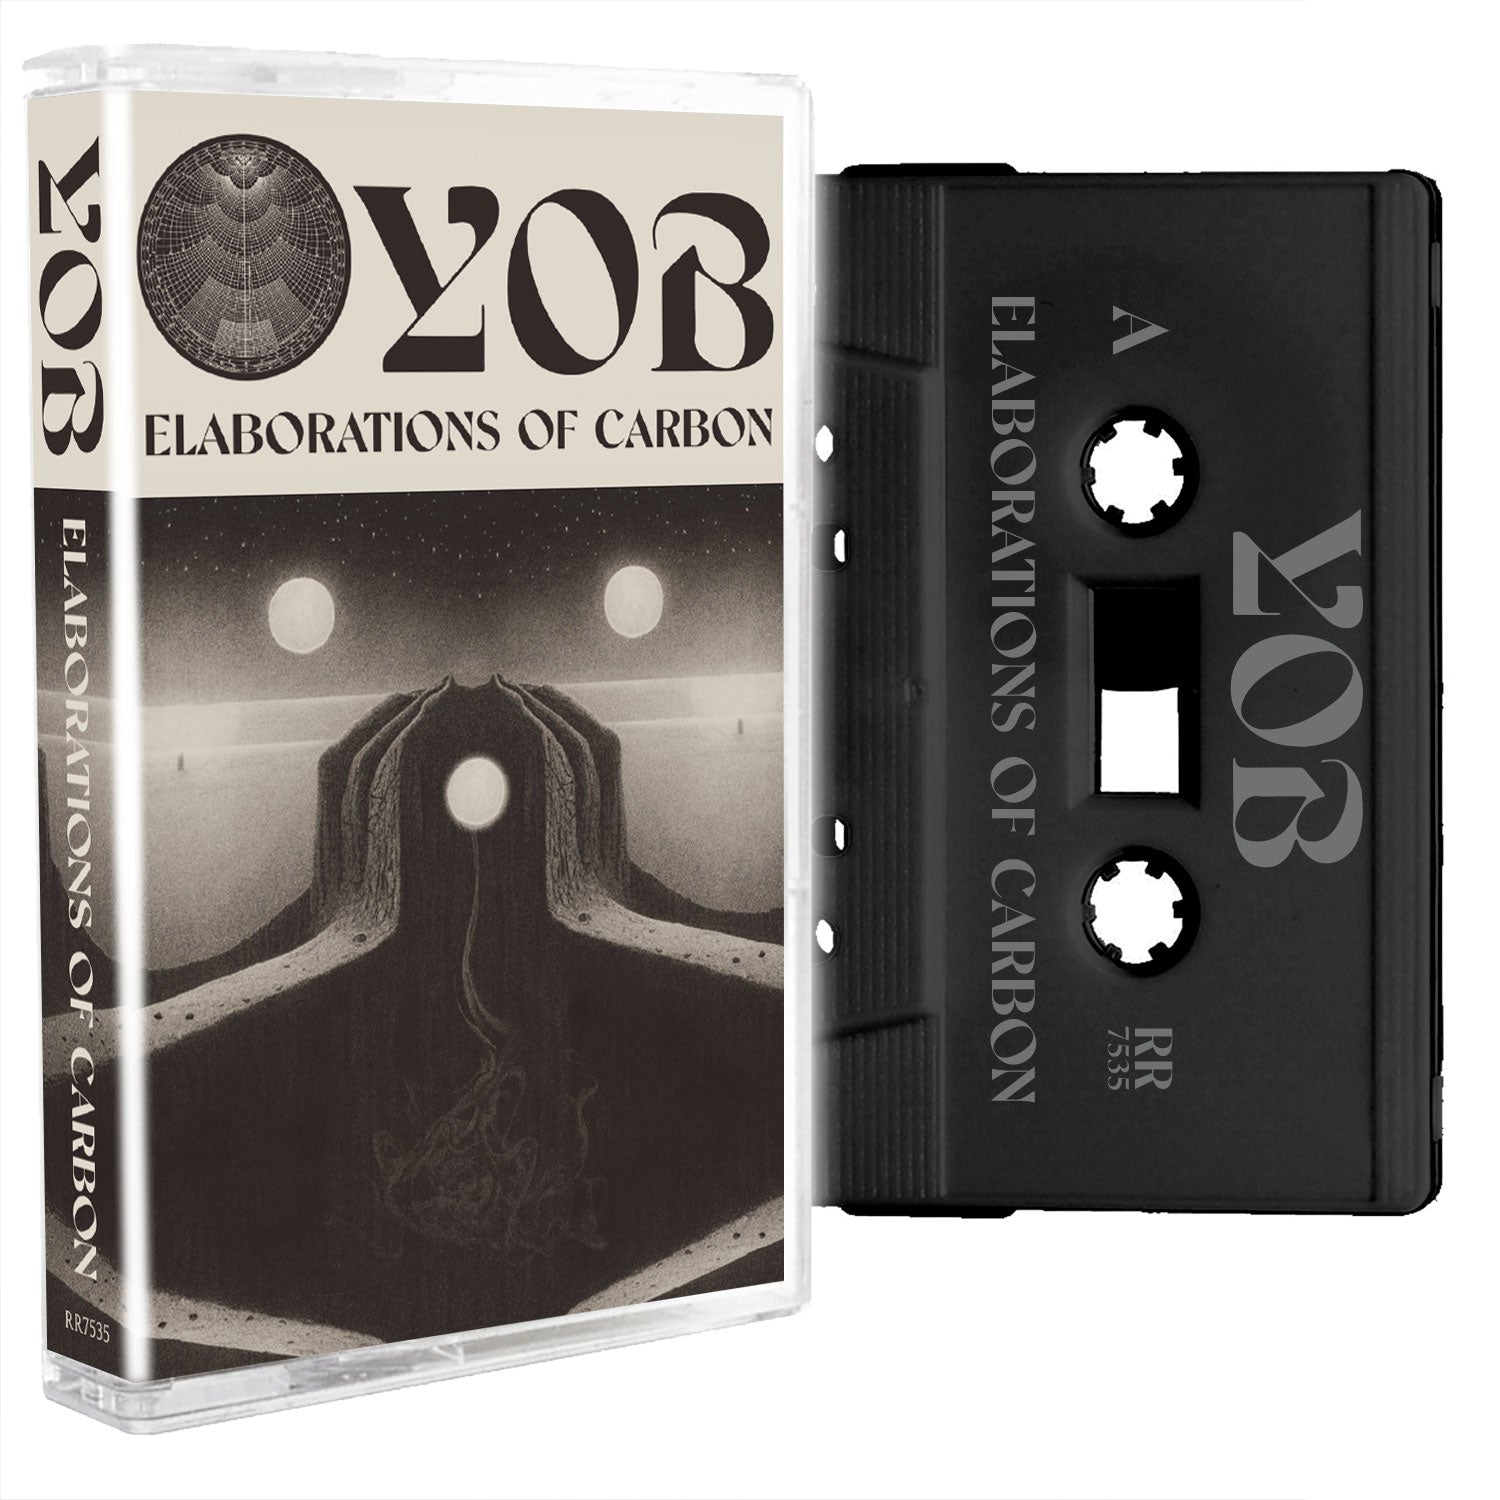 YOB "Elaborations of Carbon (Reissue)" Cassette